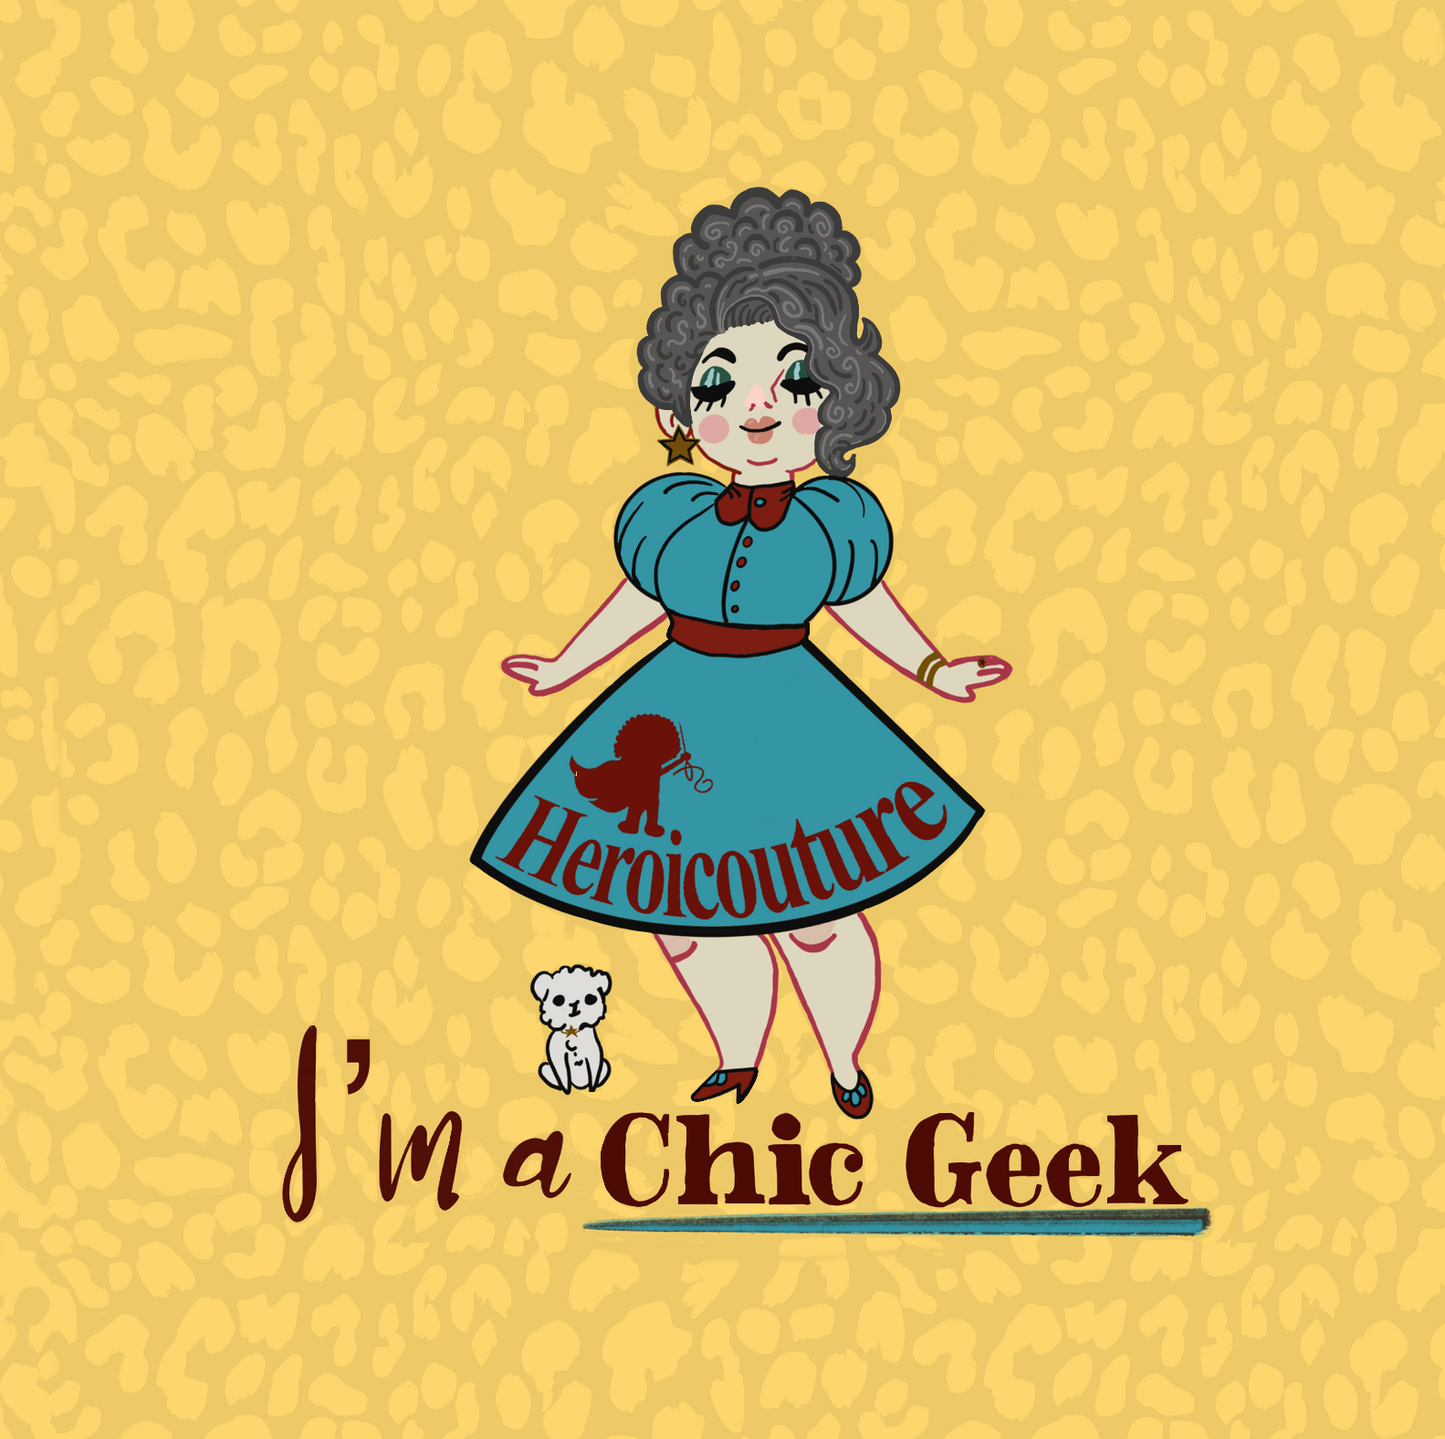 Heroicouture Chic Geek Gift Card